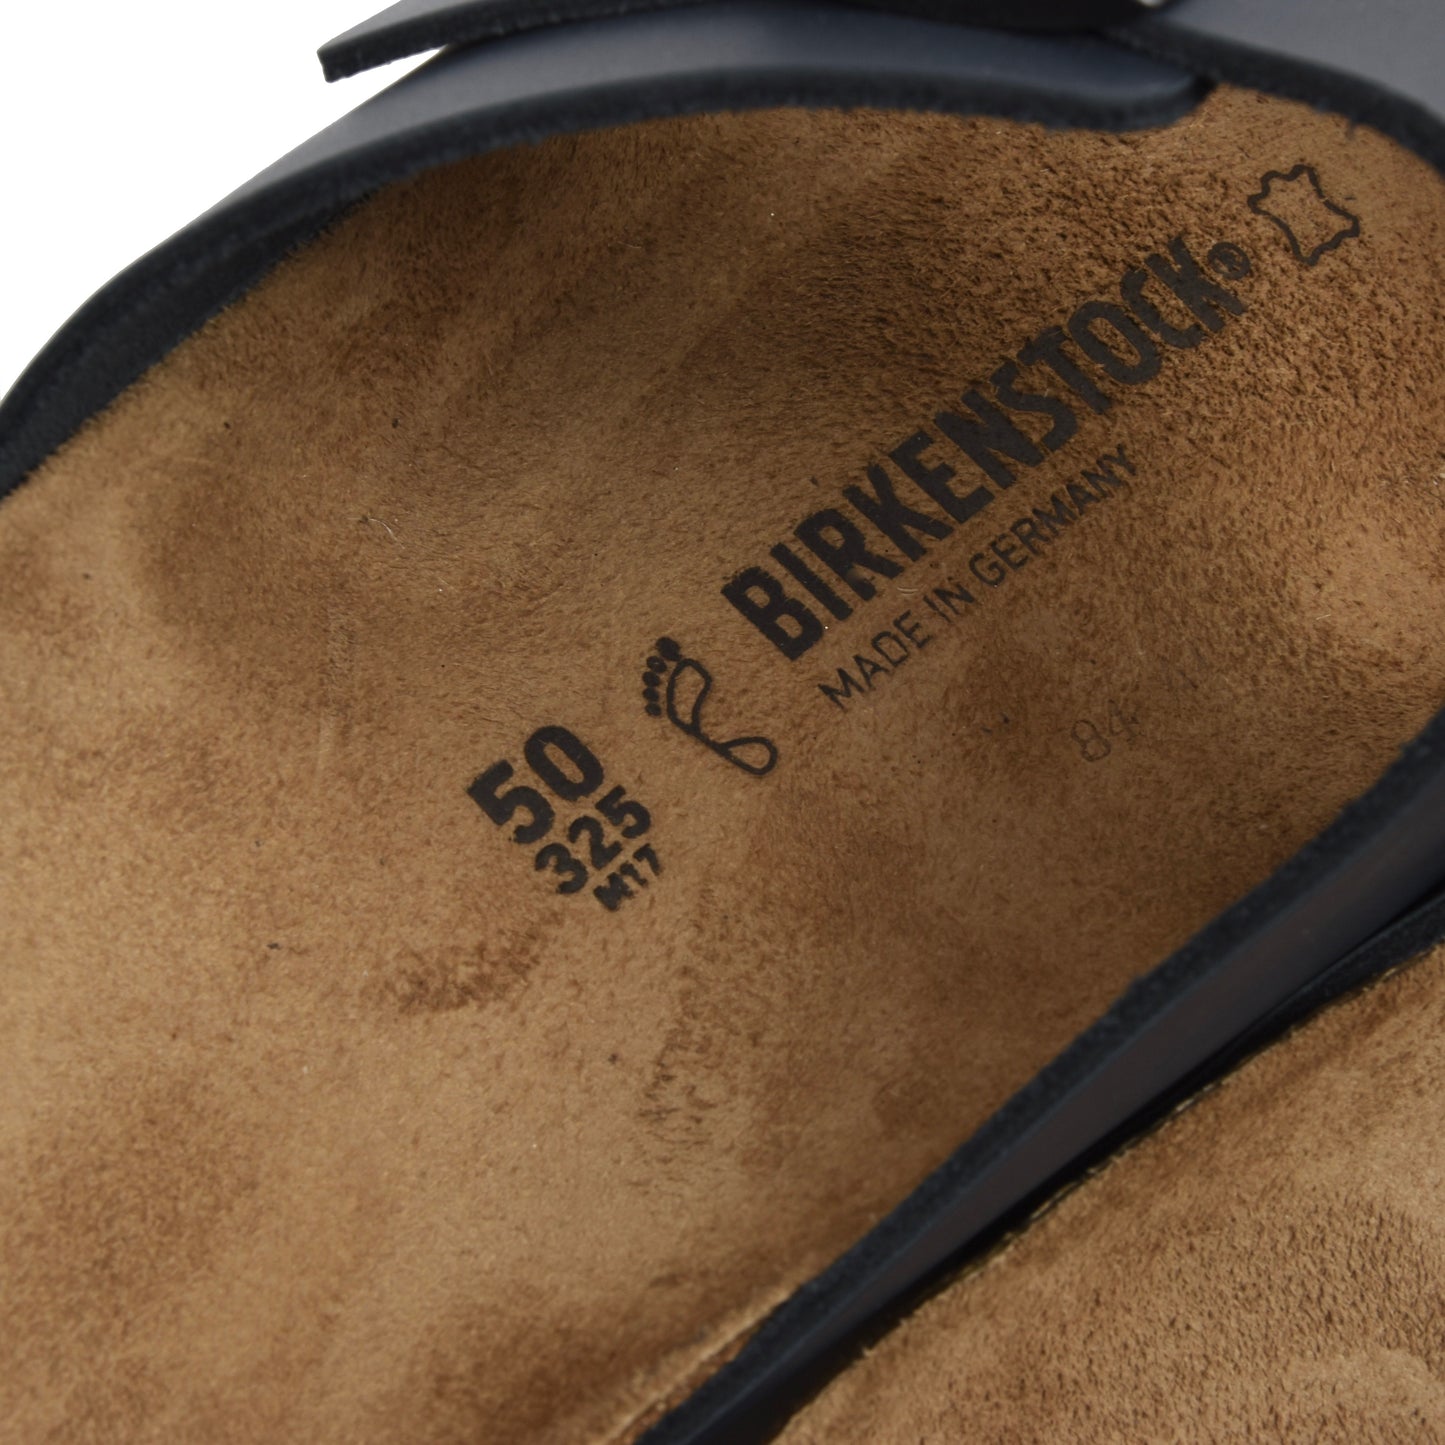 New Birkenstock Arizona Sandals Size 50 - Navy Blue